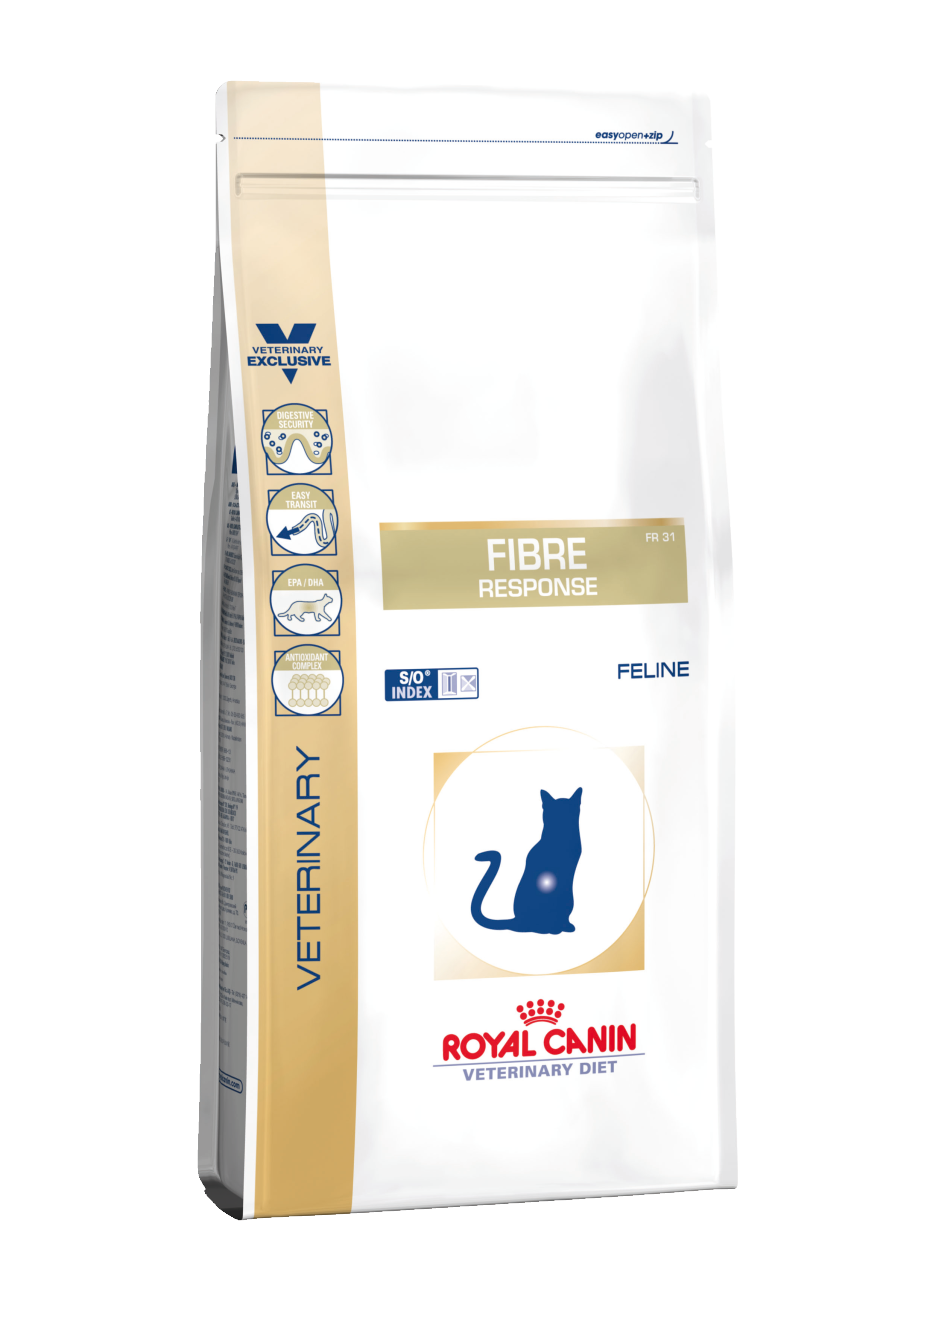 royal canin fibre cat